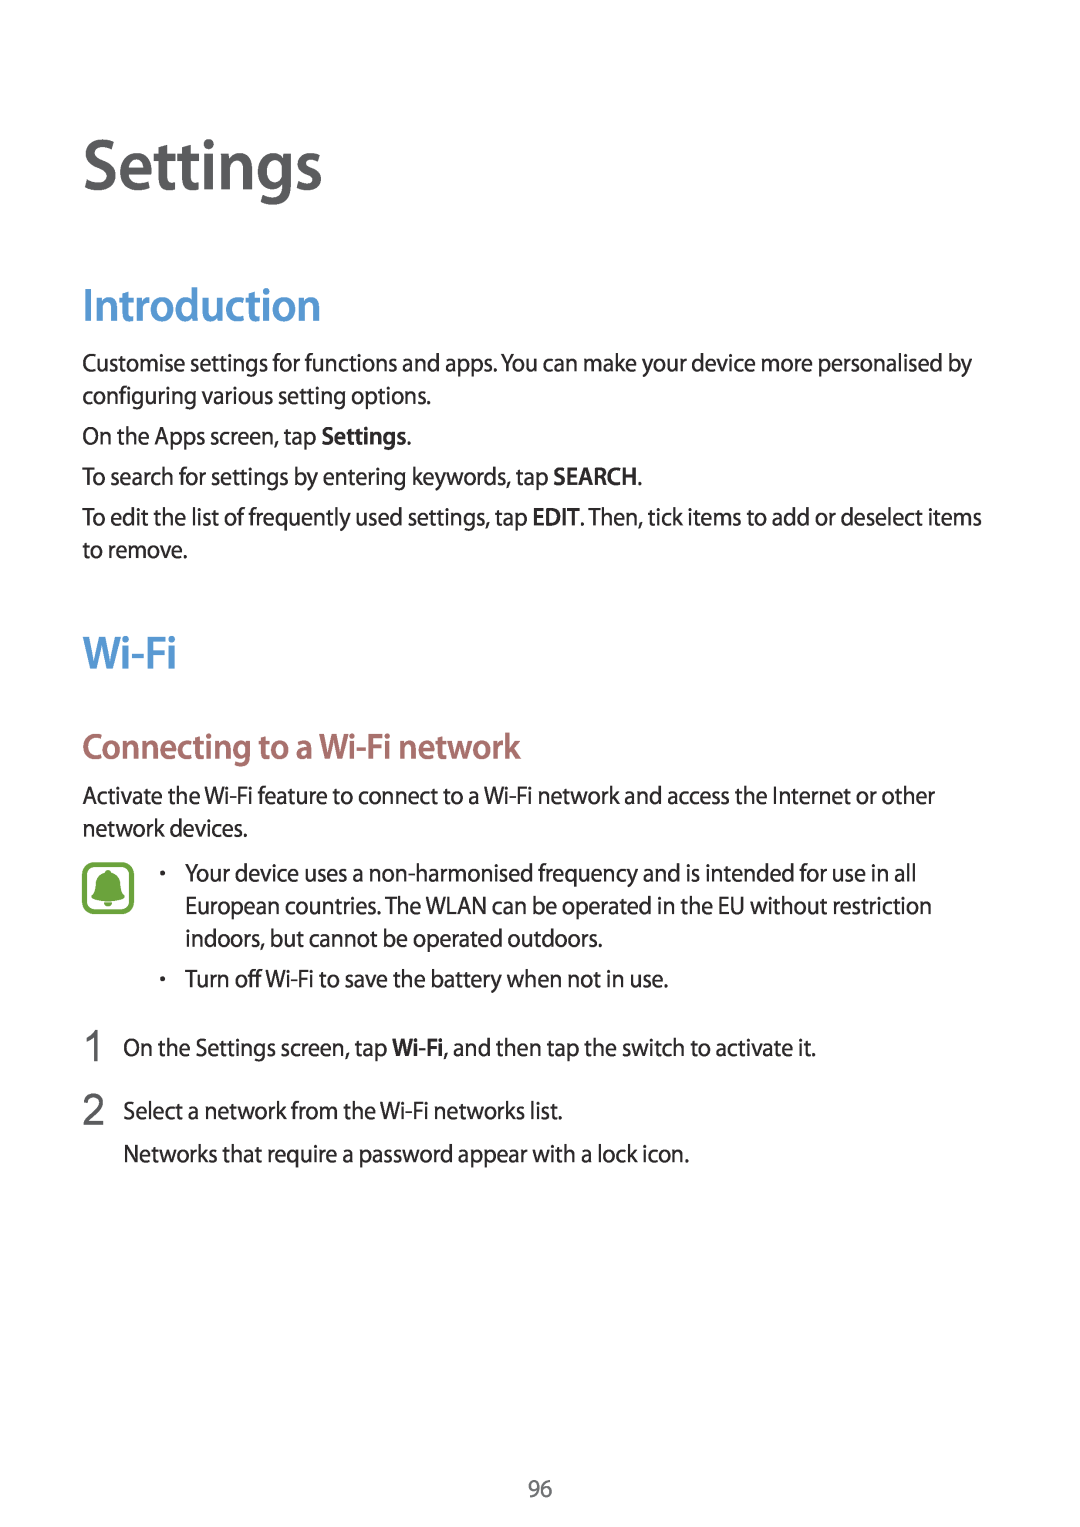 Samsung SM-G920IZBAKSA, SM-G920FZKFDBT, SM-G920FZKEDBT manual Settings, Introduction, Connecting to a Wi-Fi network 